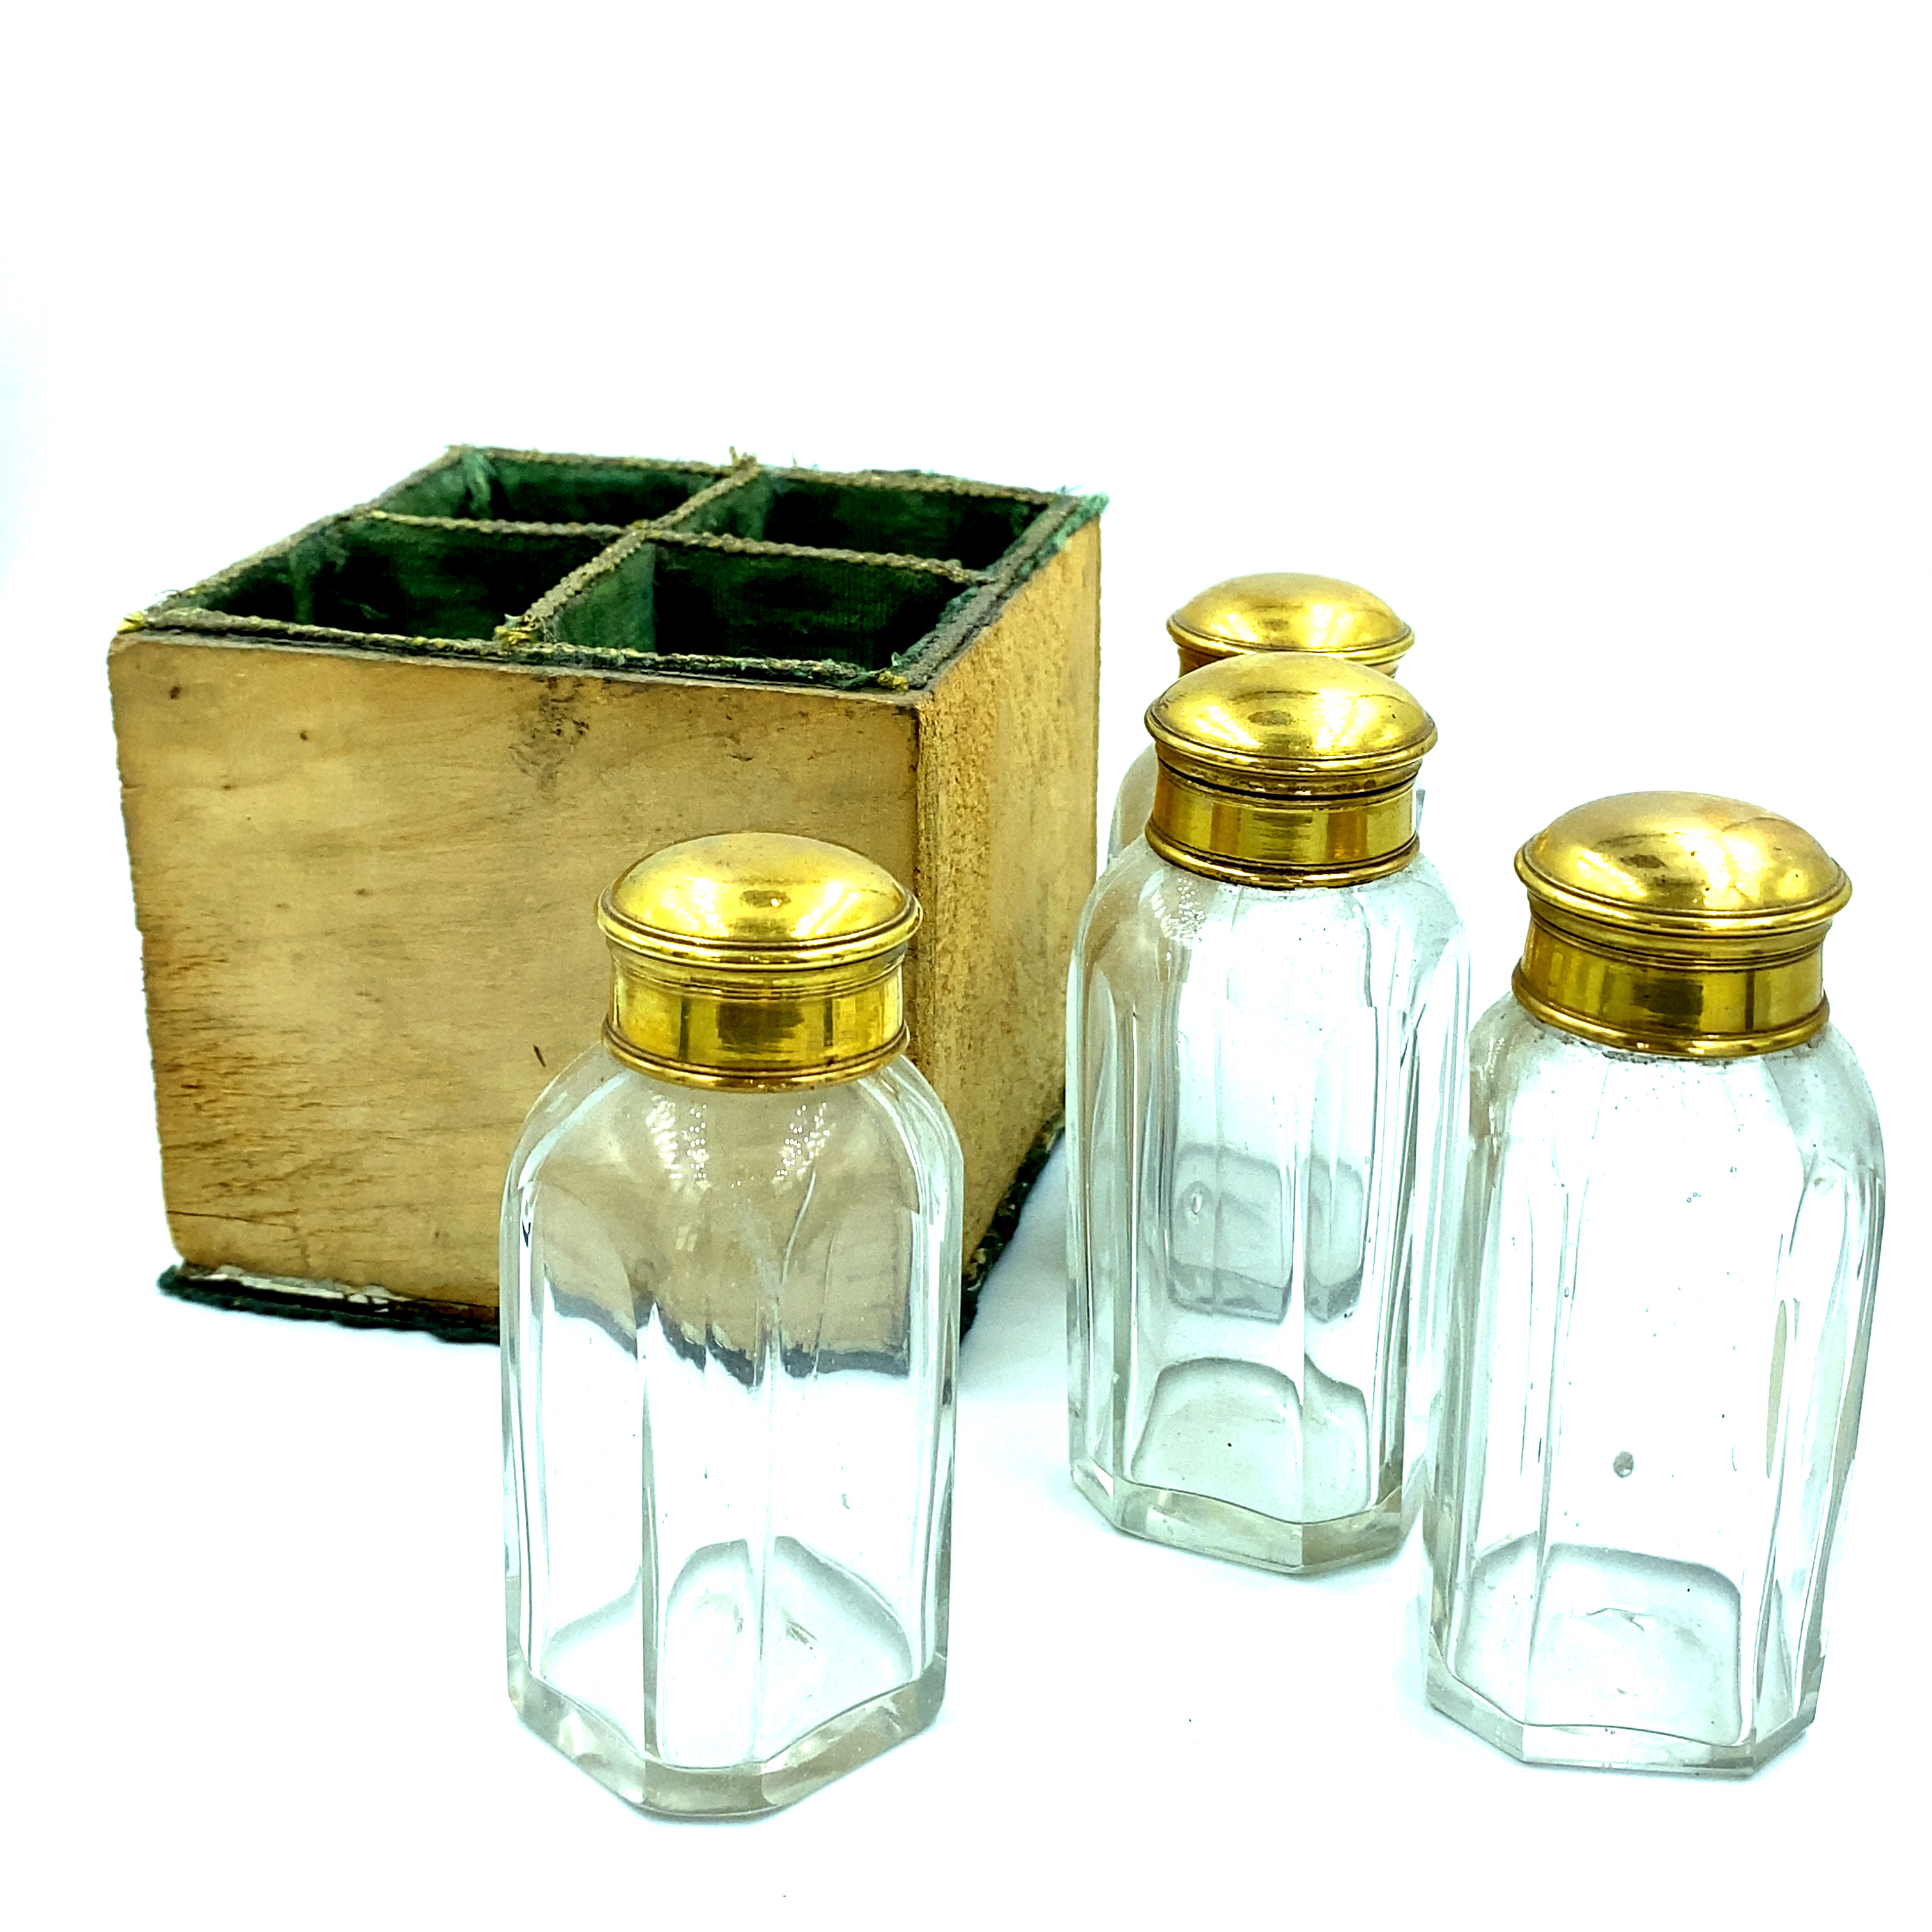 Four Perfume Bottles - Image 2 of 5